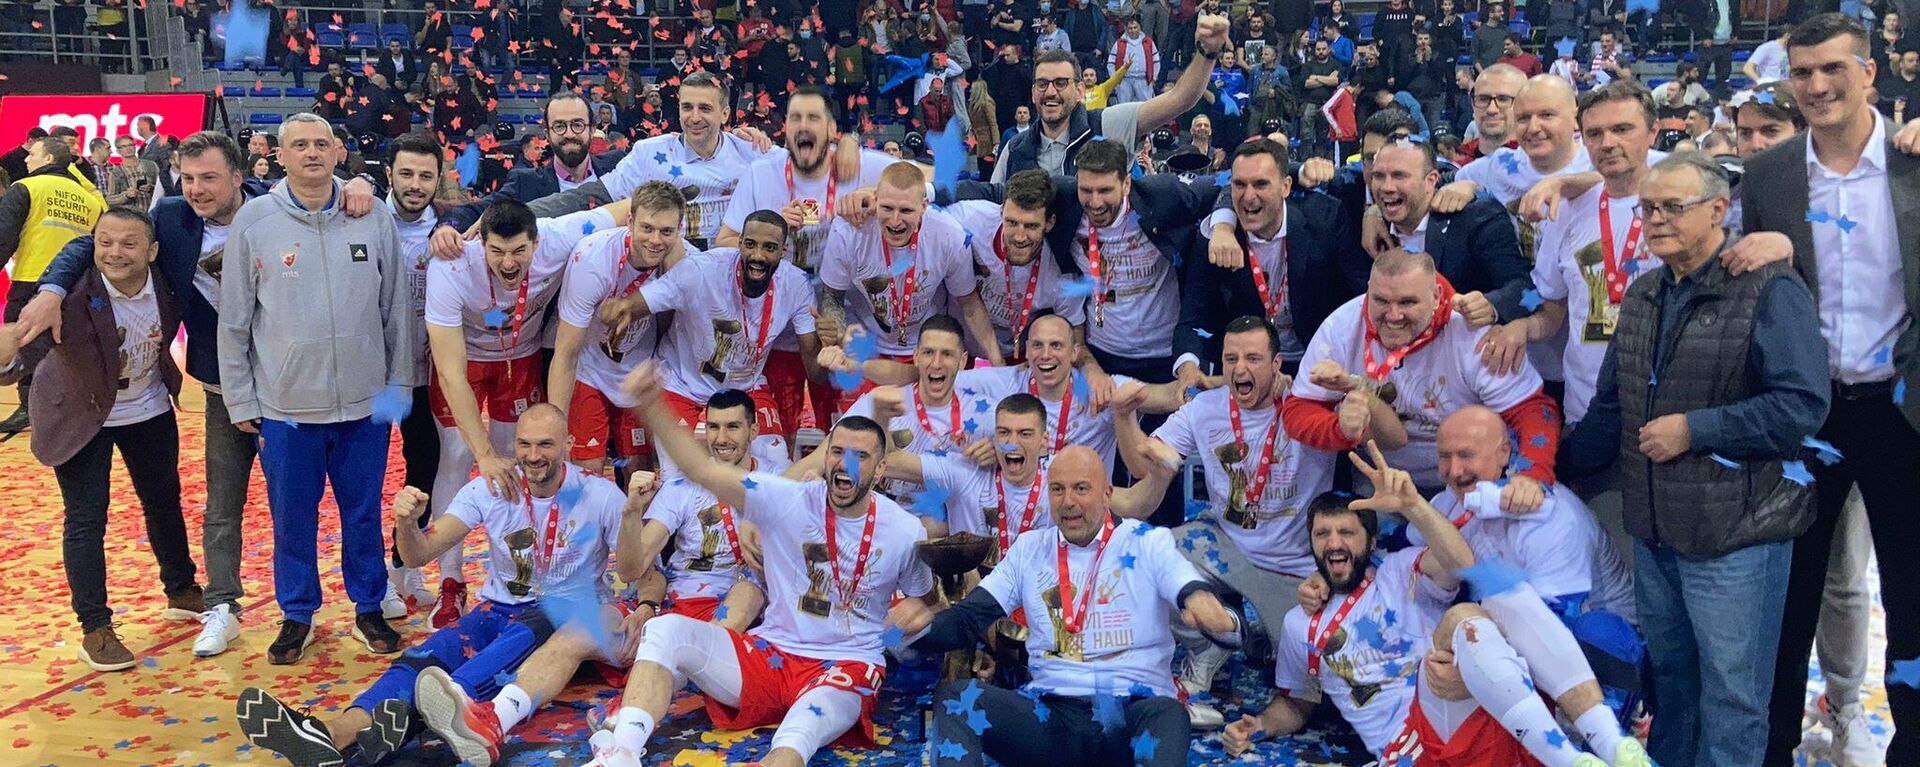 Košarkaši Crvene zvezde proslavljaju osvajanje Kupa Radivoja Koraća za 2022. - Sputnik Srbija, 1920, 20.02.2022